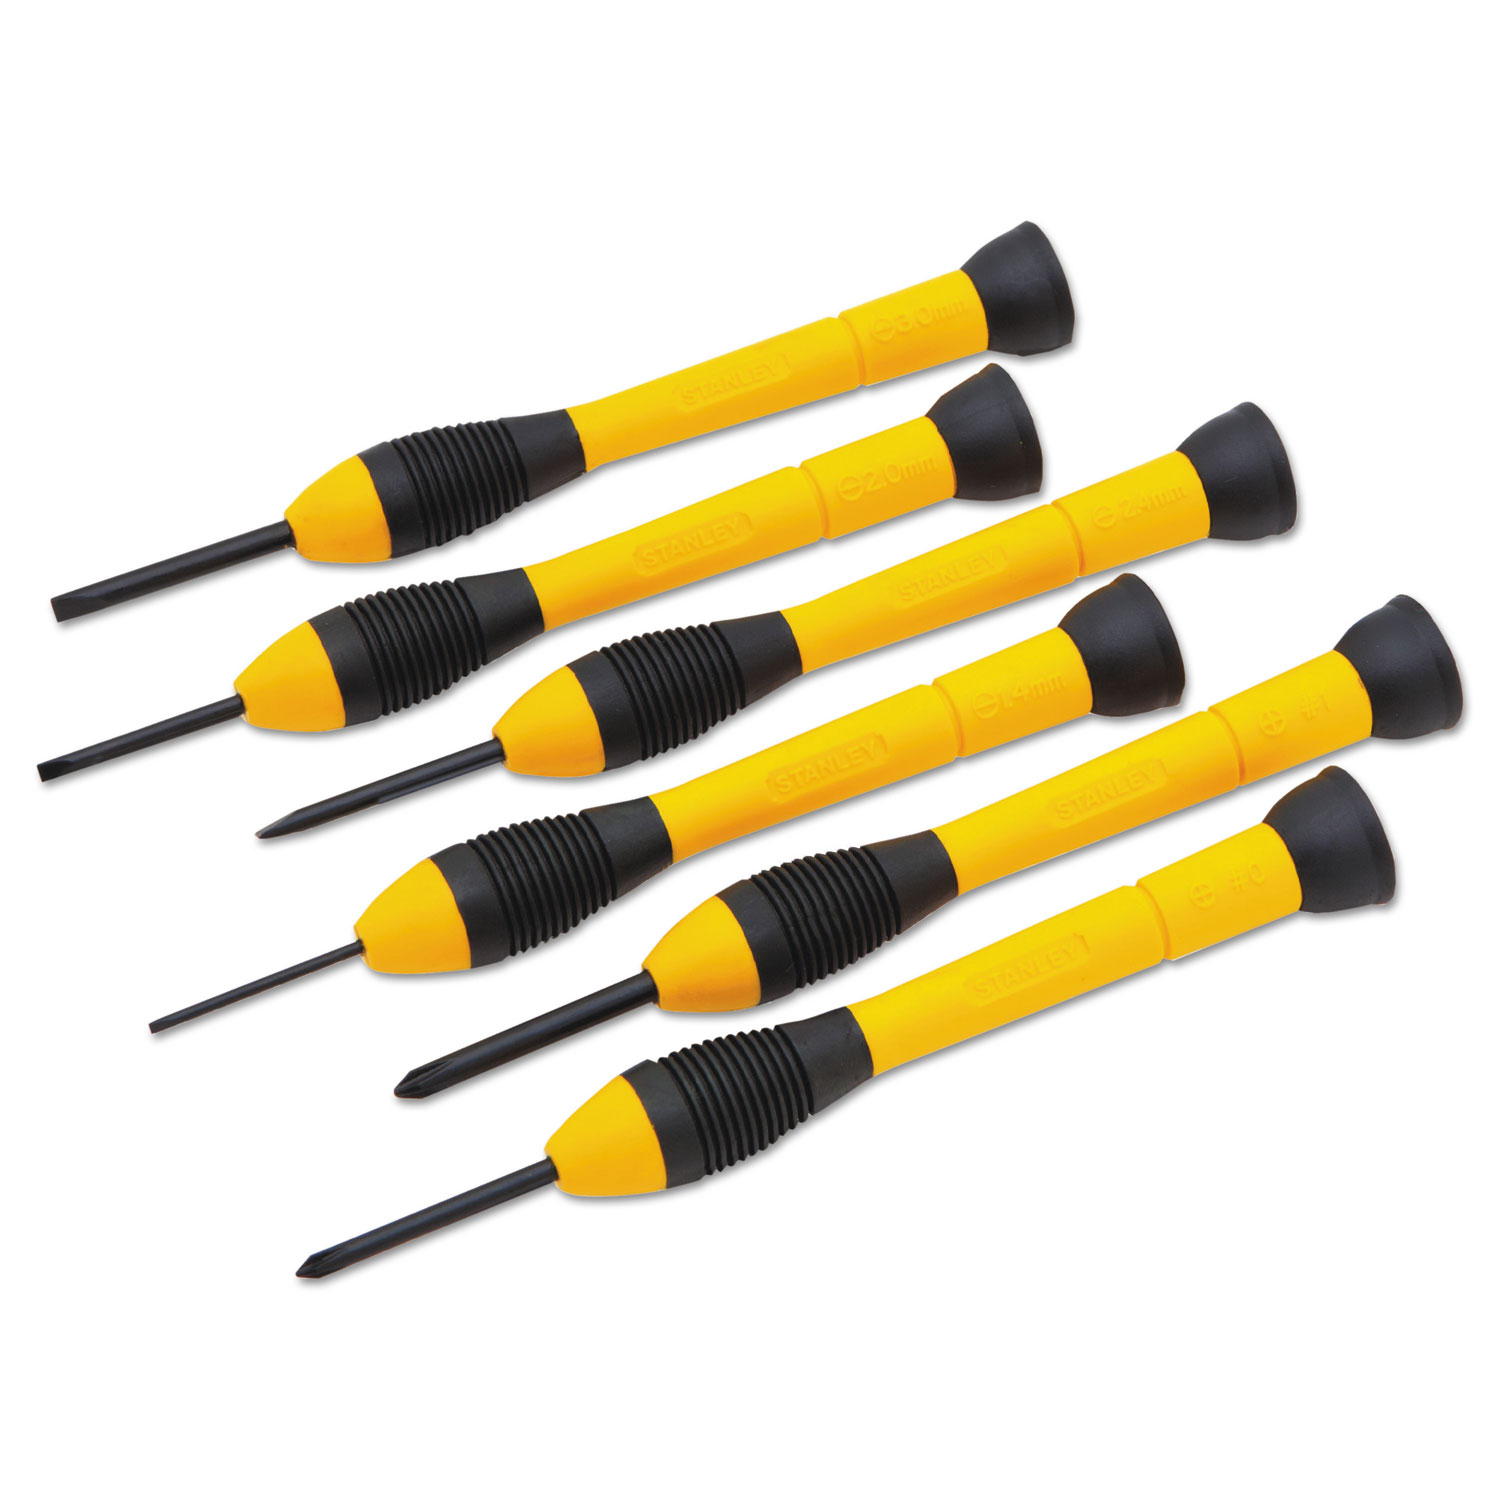  Stanley Tools 66-052 6-Piece Precision Screwdriver Set, Black/Yellow (BOS66052) 